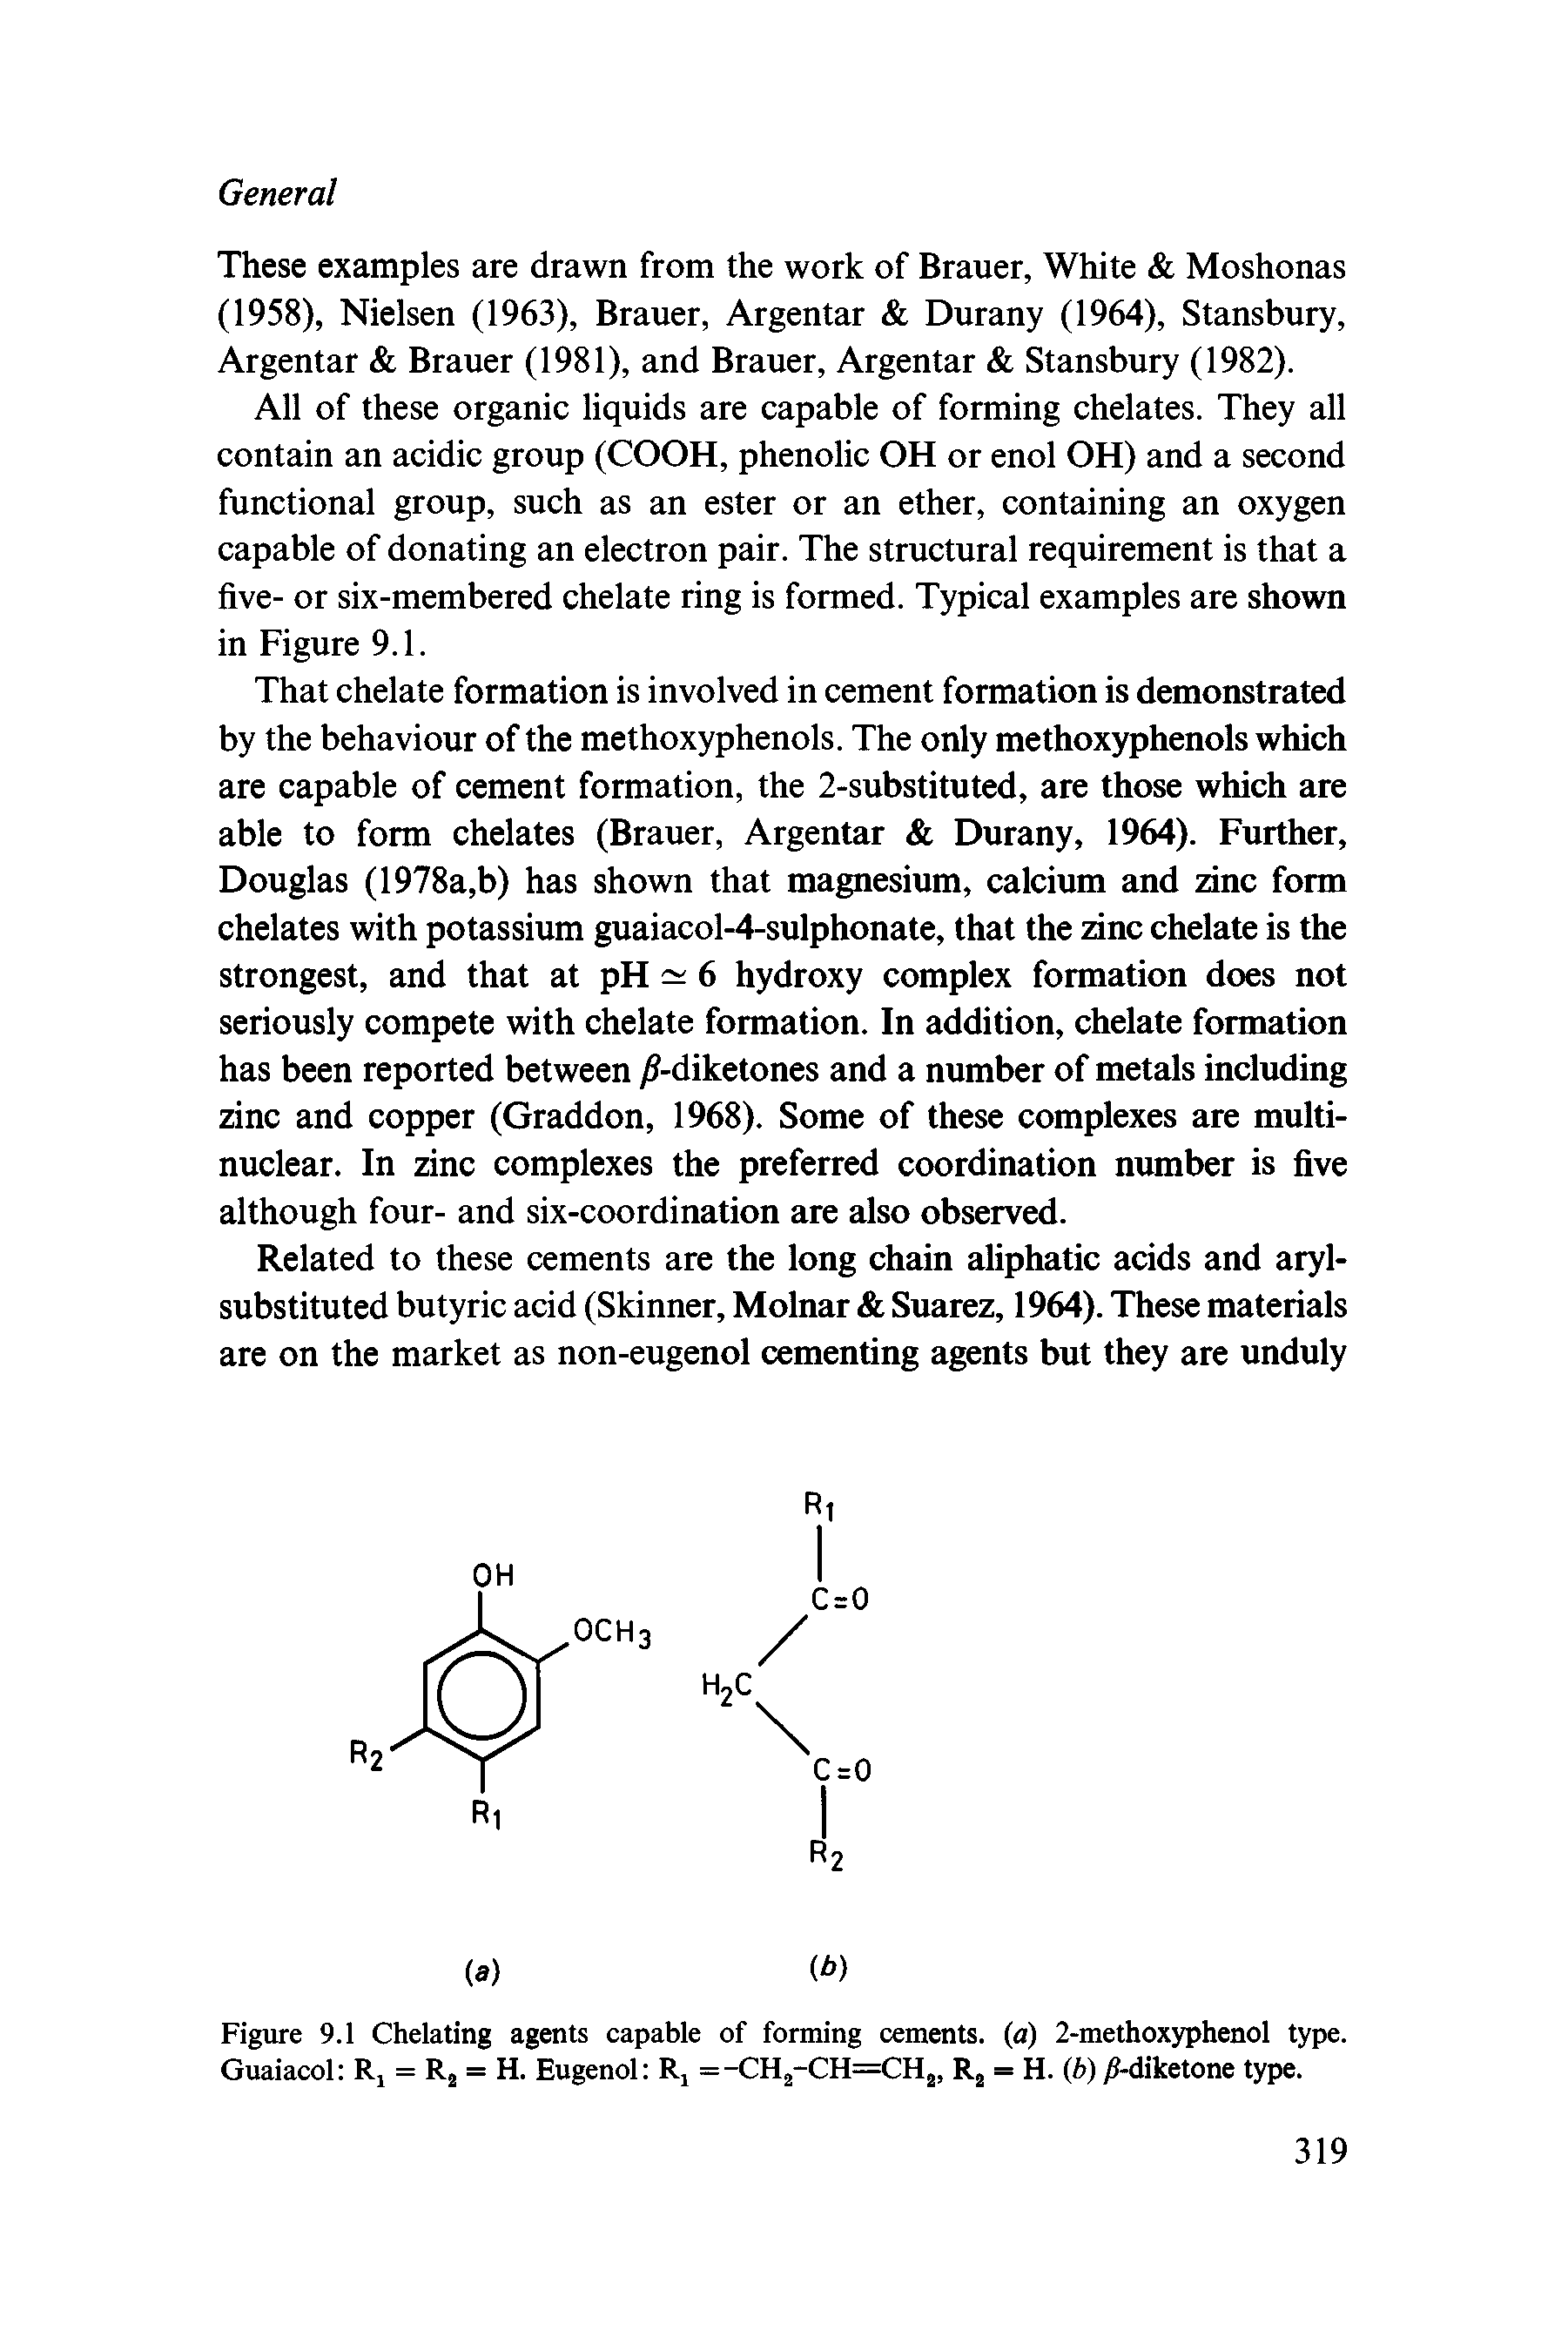 Figure 9.1 Chelating agents capable of forming cements, (a) 2-methoxyphenol type. Guaiacol Rj = = H. Eugenol Rj =-CH2-CH=CH2, Rj = H. (b) y -diketone type.